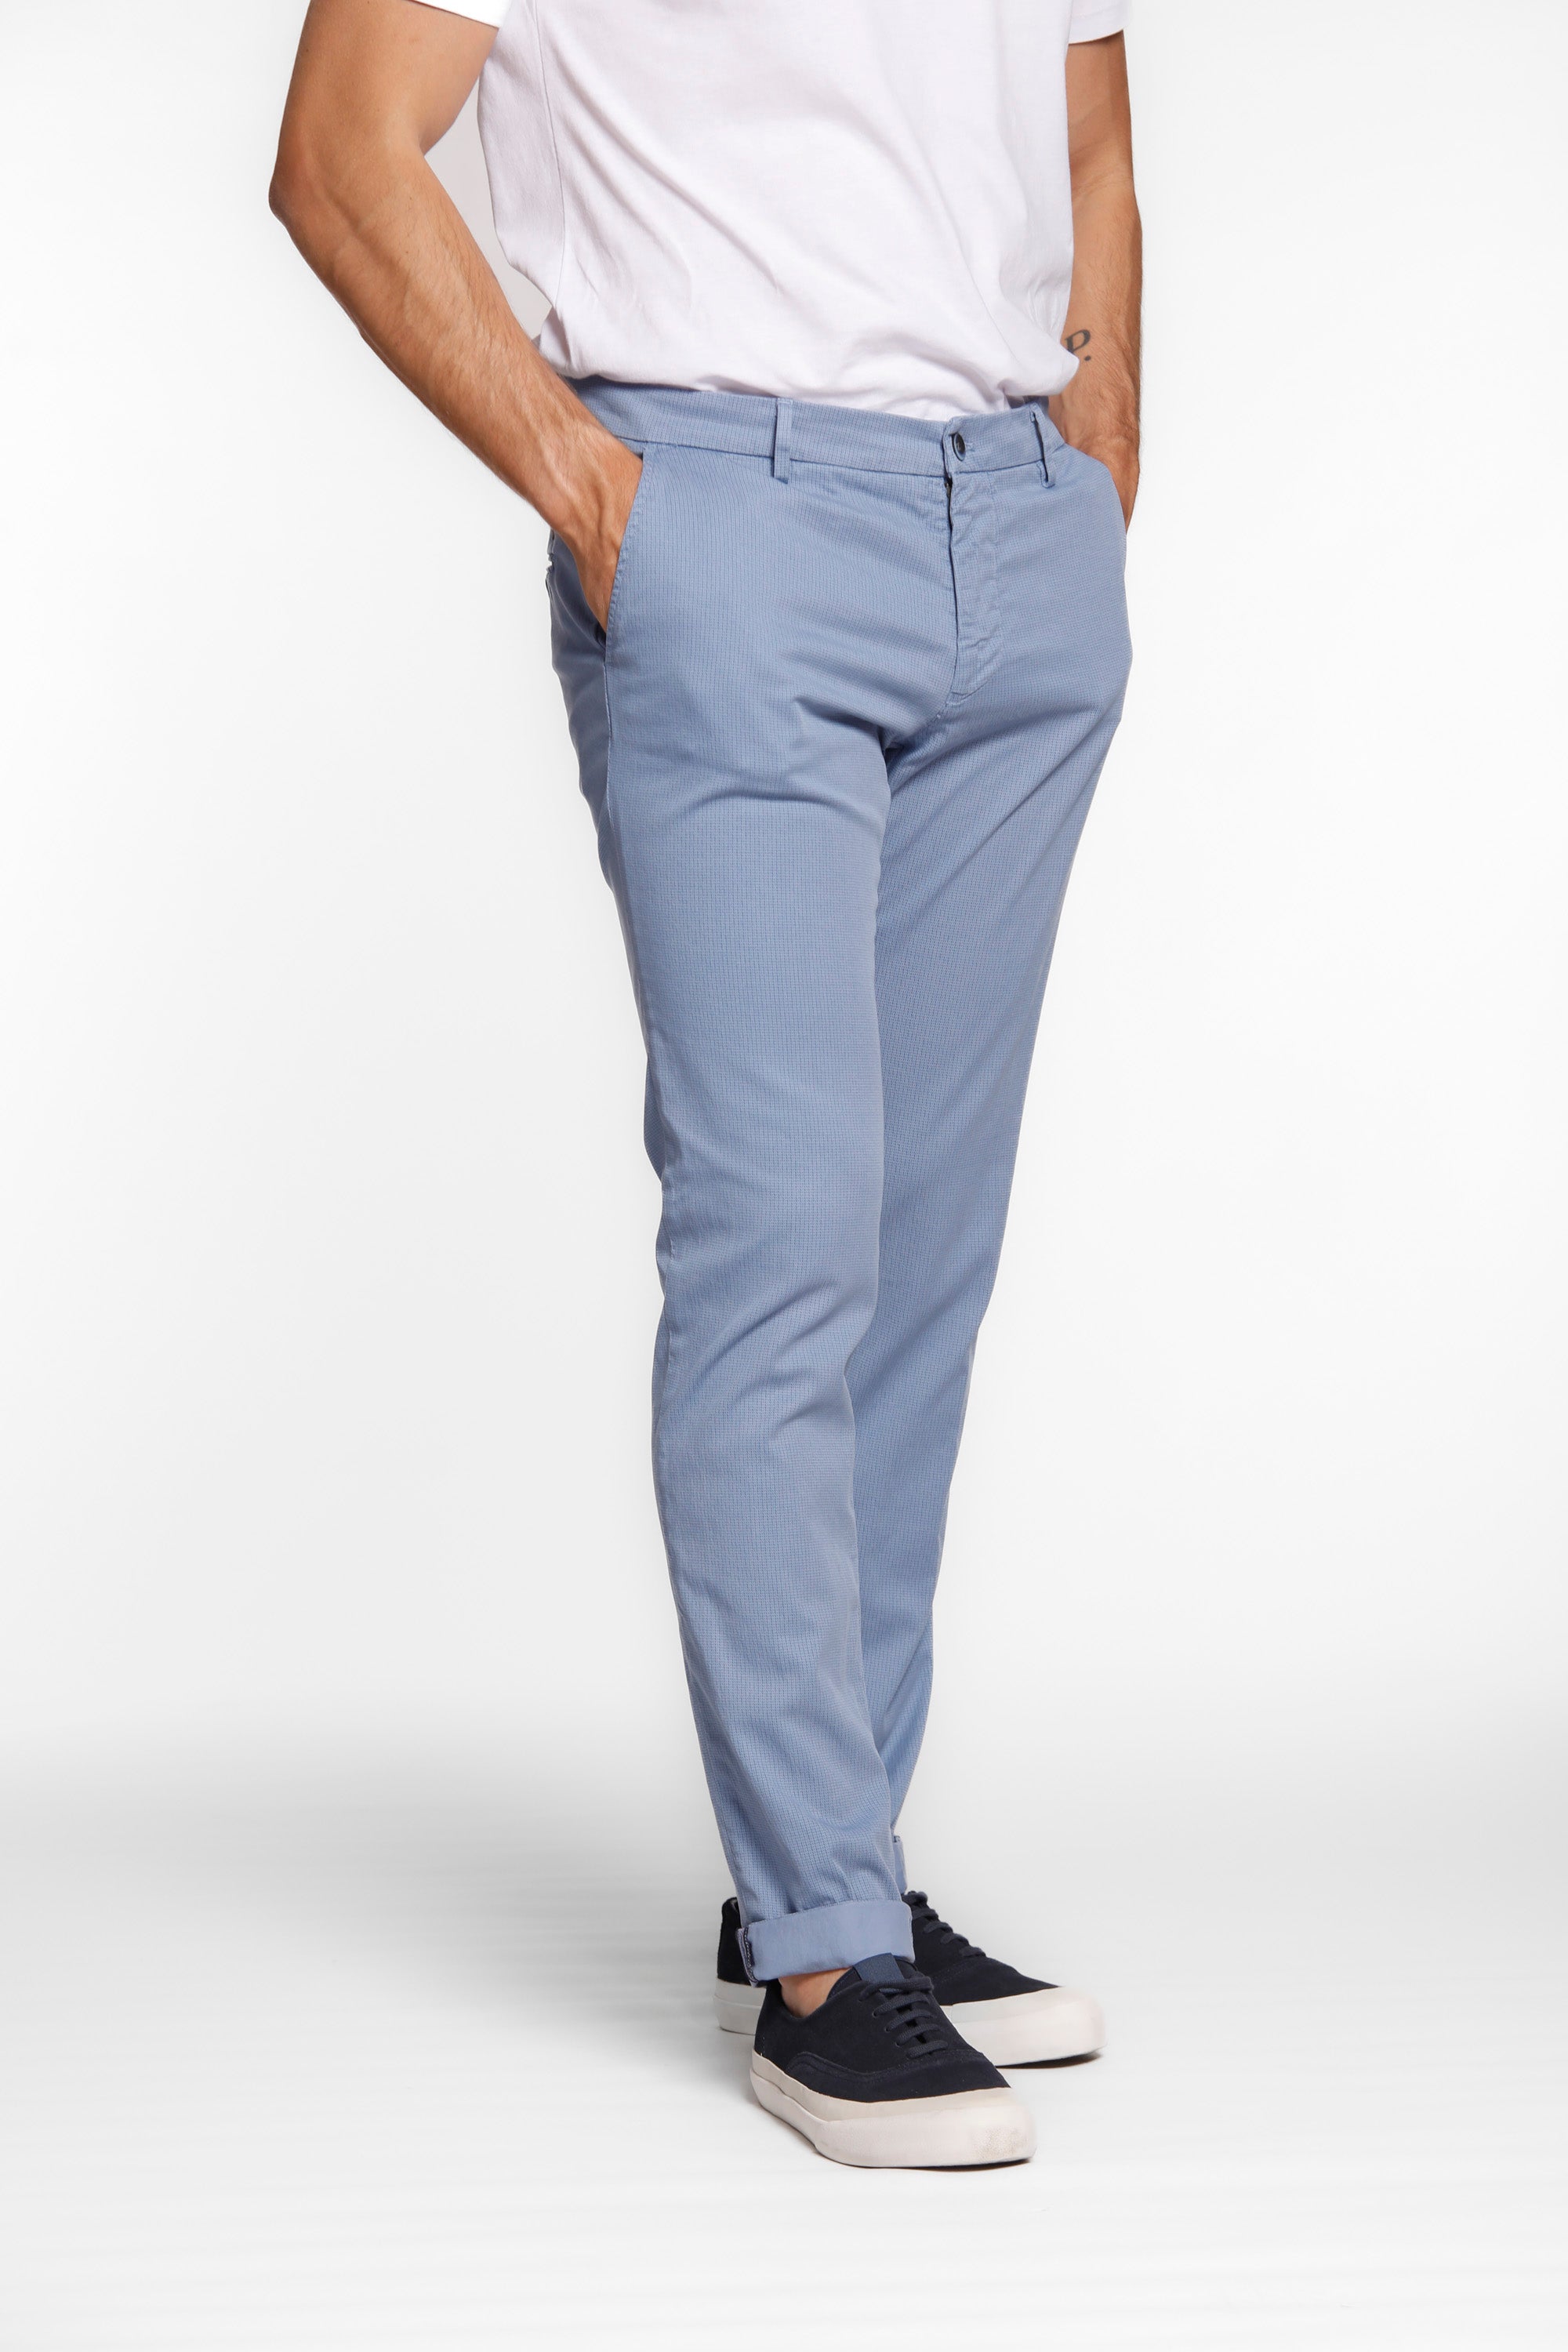 Milano Style pantalone chino uomo in twill e tencel microstampa extra slim